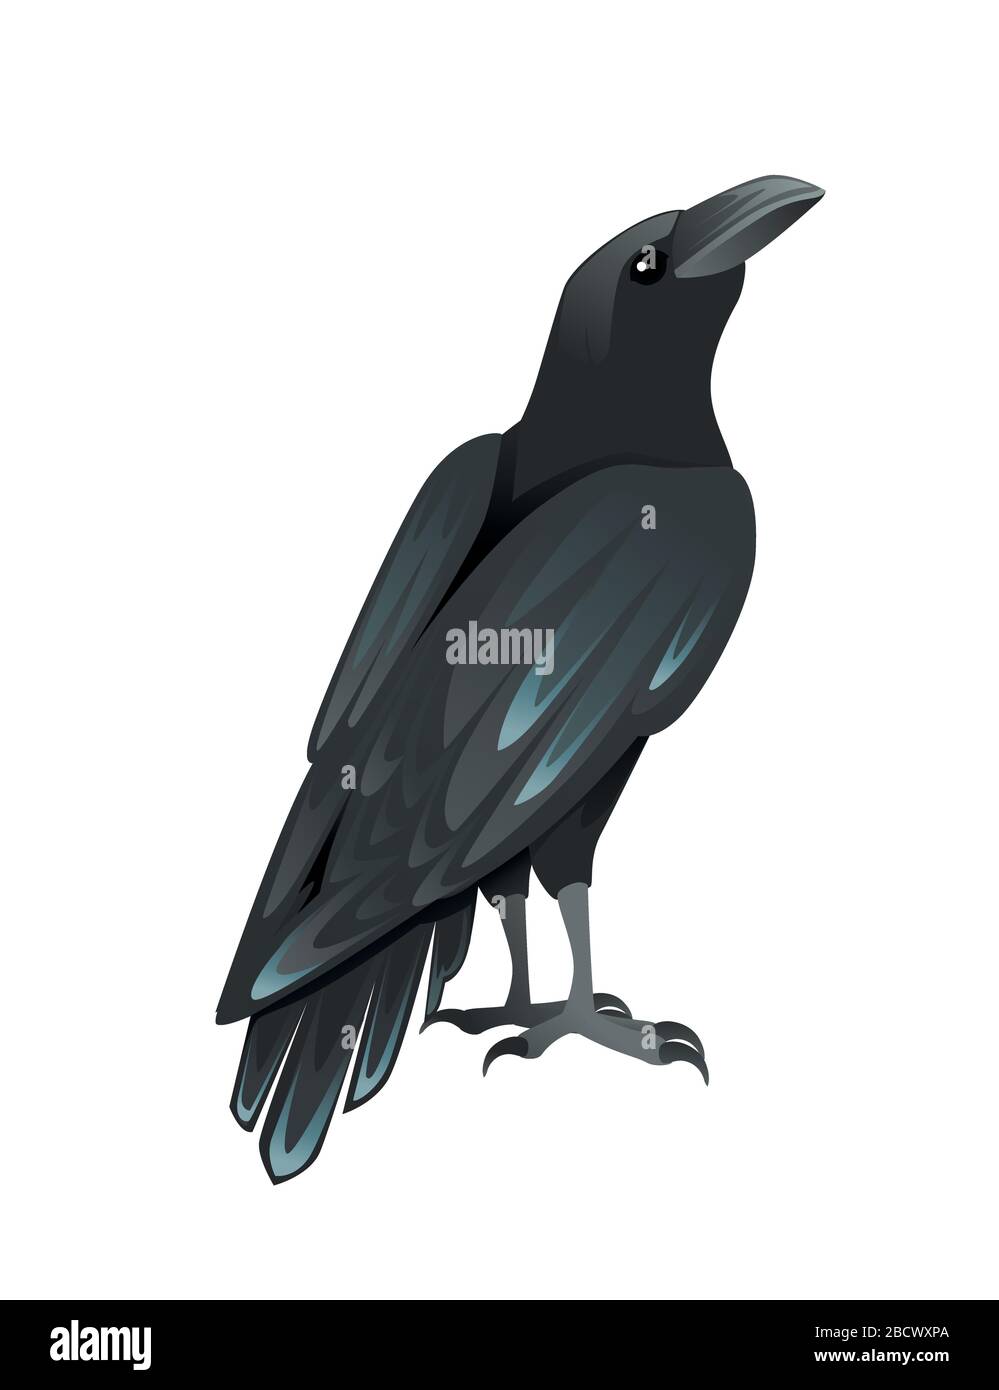 Black raven bird cartoon crow design flat vector animal illustration isolated on white background Stock Vector